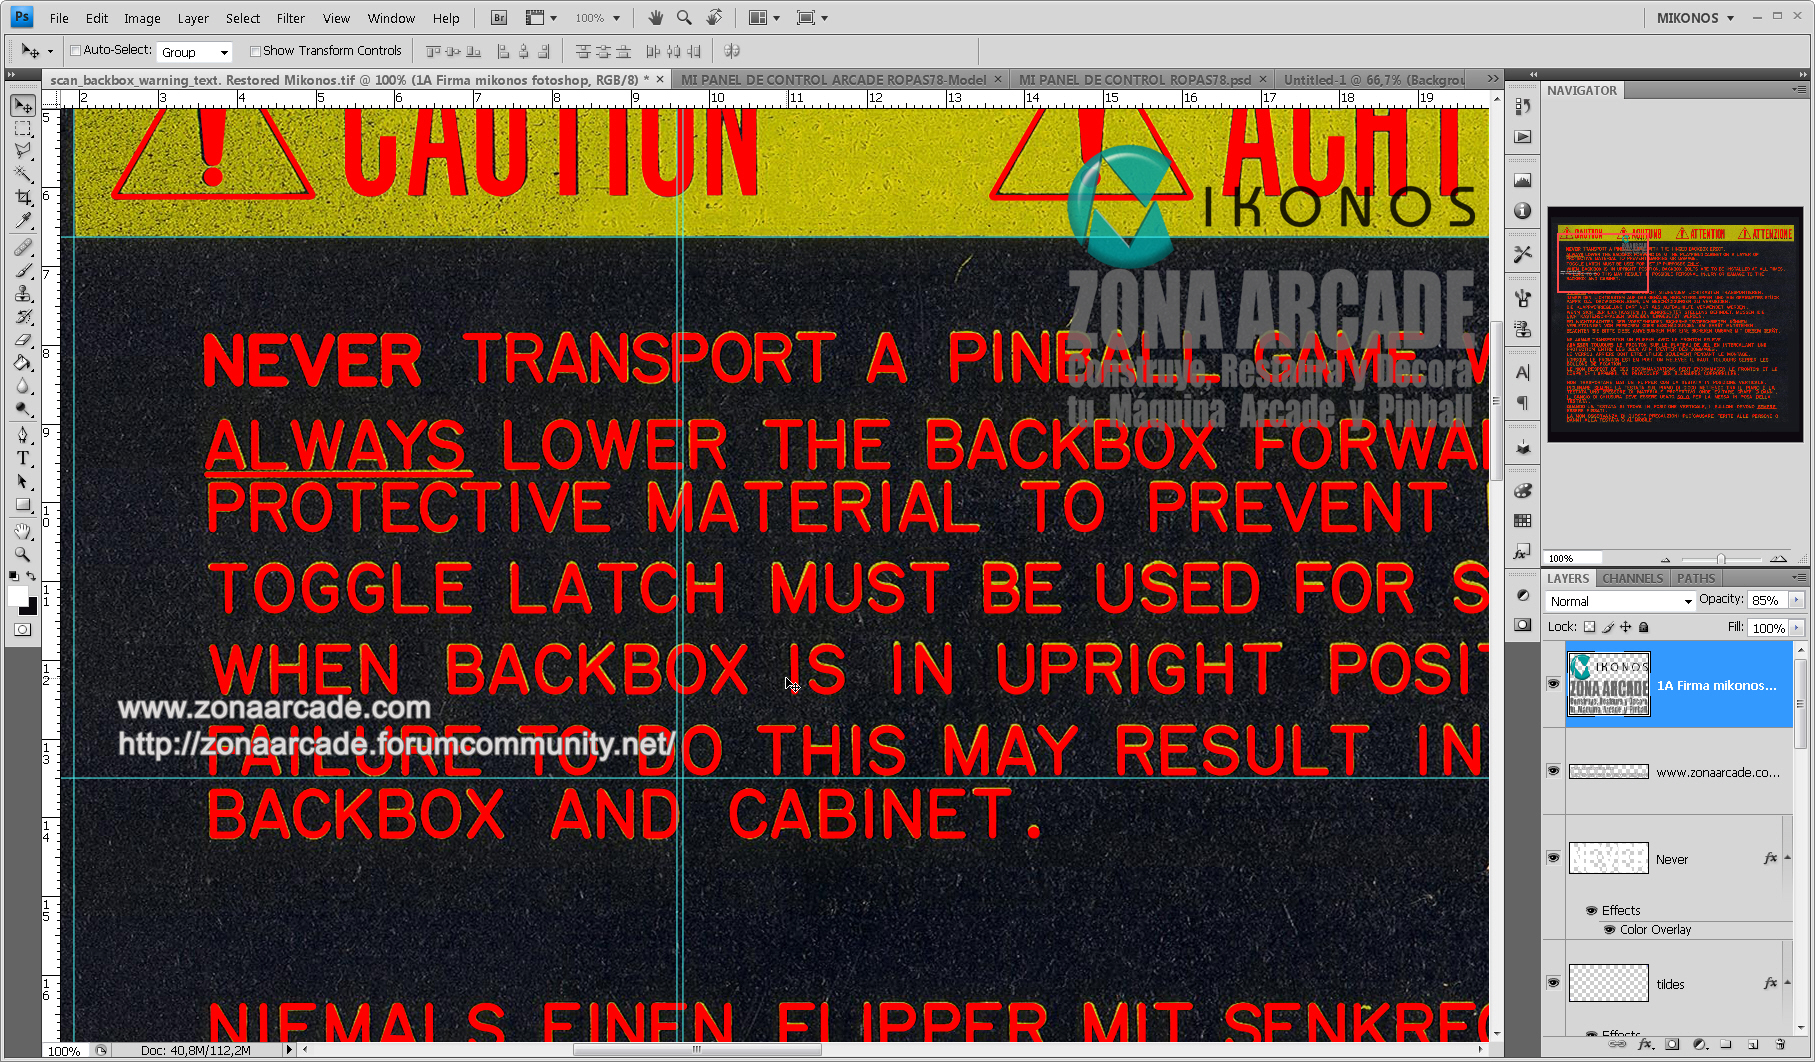 Backbox Williams Pinball Warning Text. In restoration Mikonos3